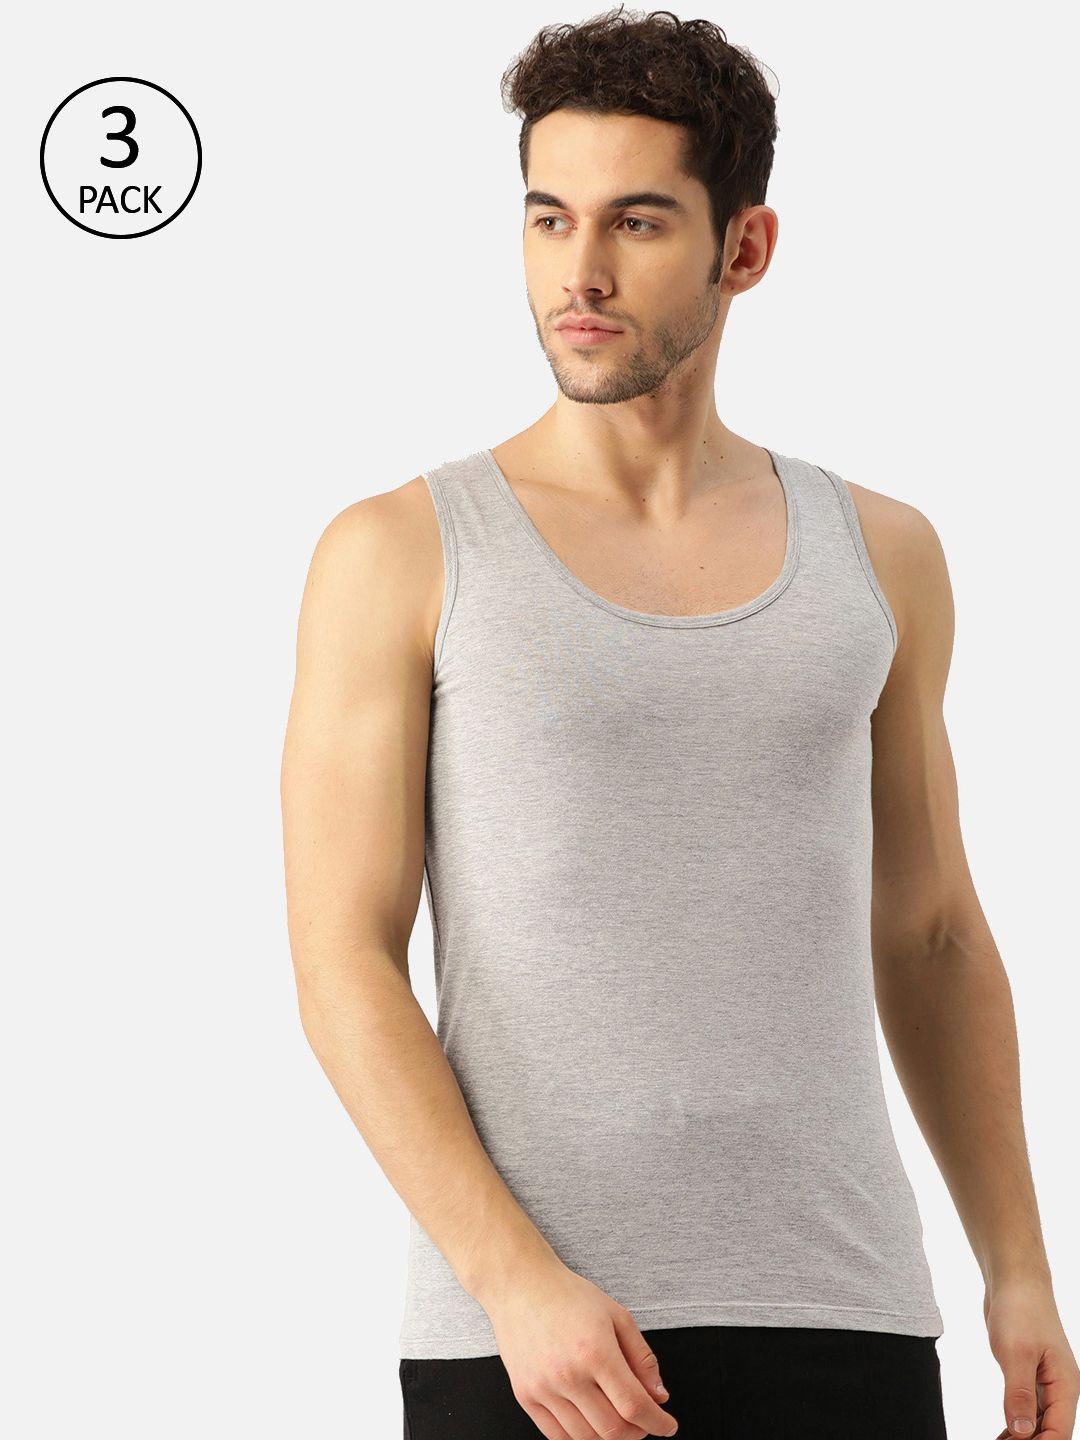 romeo-rossi-pack-of-3-grey-melange-round-neck-innerwear-vests